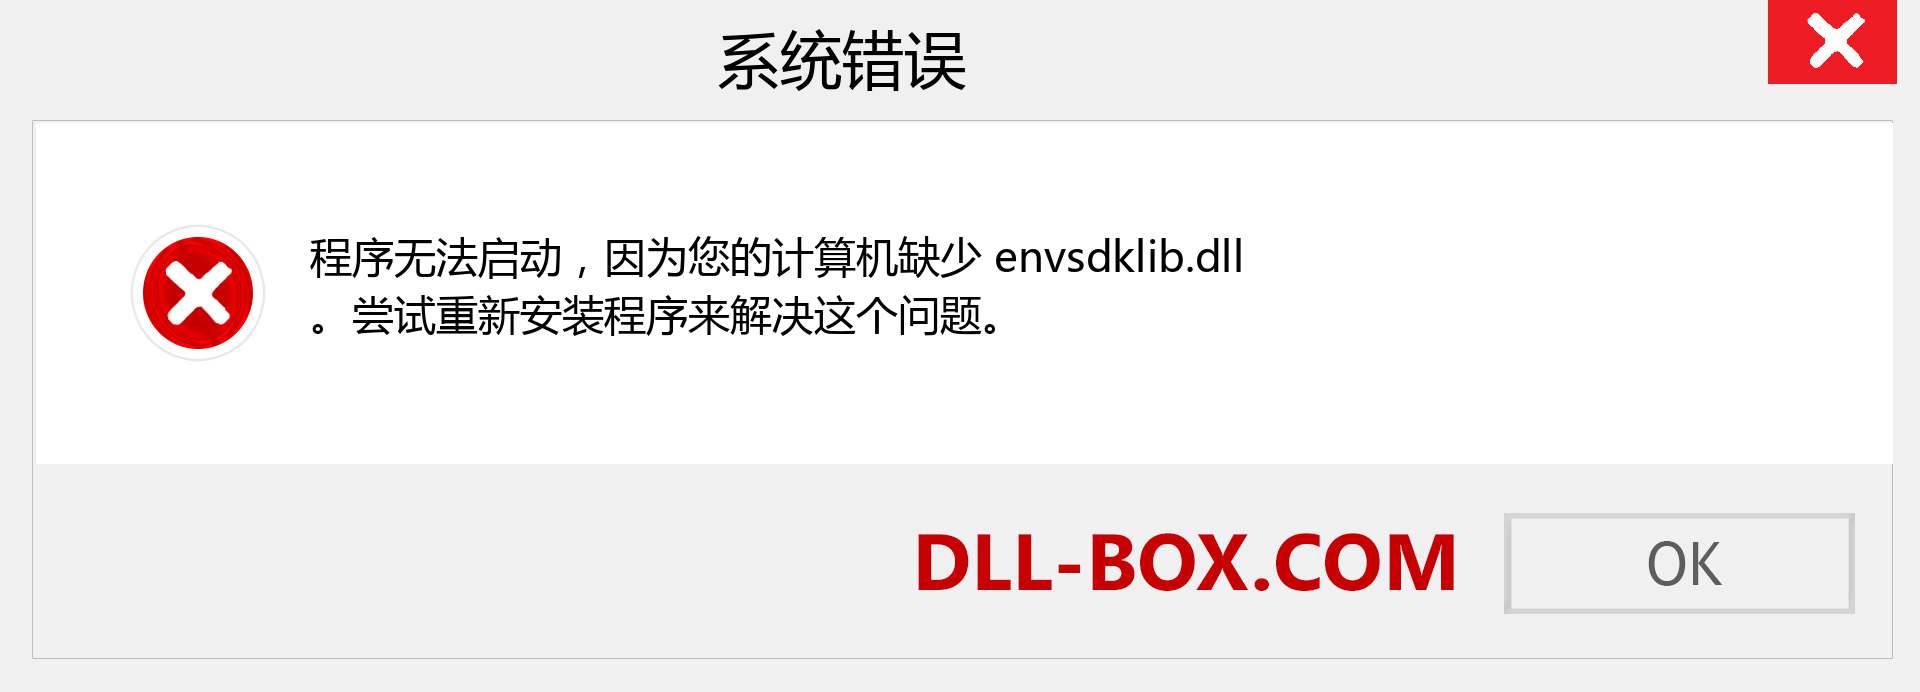 envsdklib.dll 文件丢失？。 适用于 Windows 7、8、10 的下载 - 修复 Windows、照片、图像上的 envsdklib dll 丢失错误